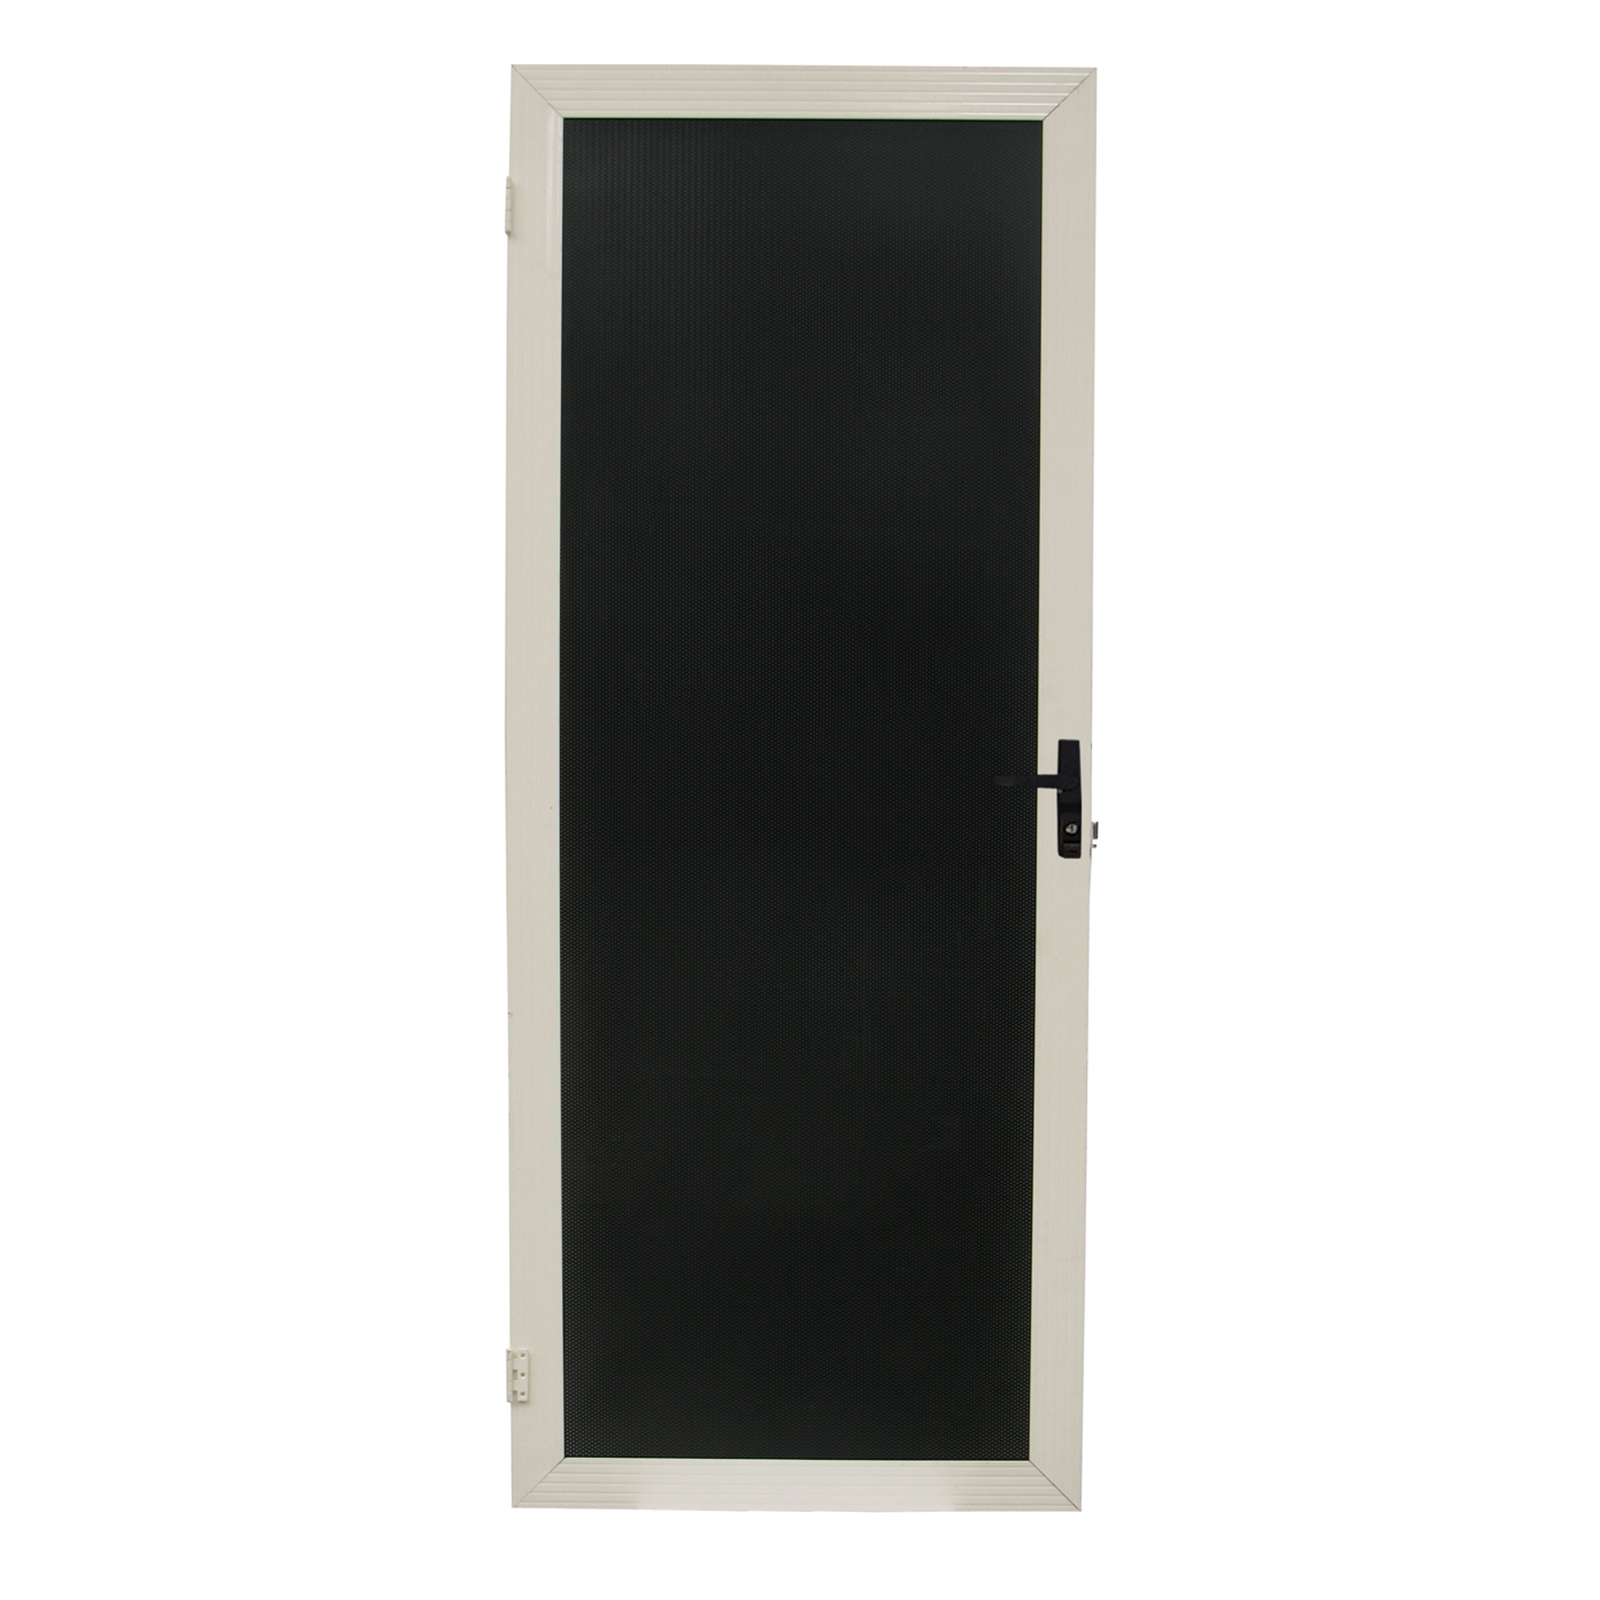 Bastion 2024 x 806mm - 2040 x 820mm White Soho Aluminium Adjustable Barrier Door